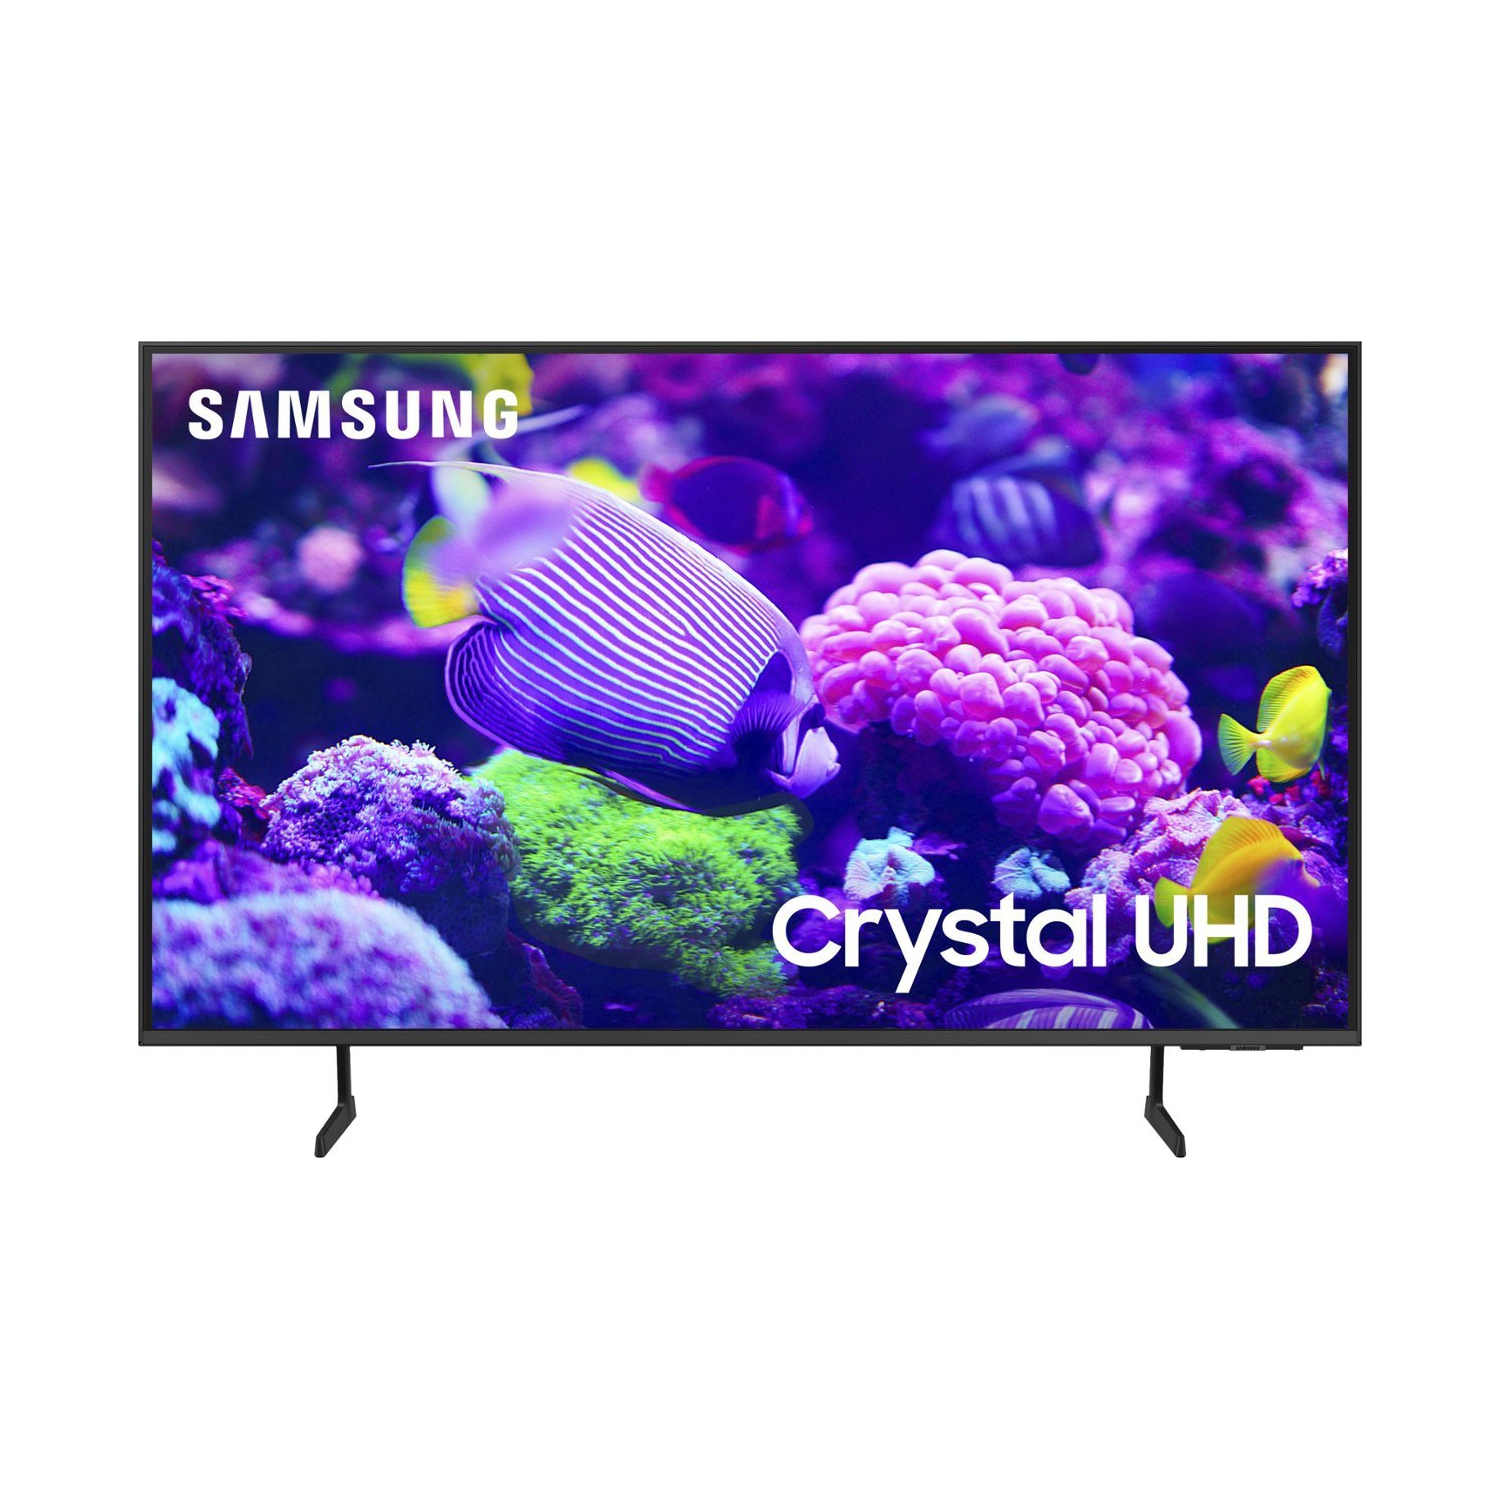 REFURBISHED (Good)-SAMSUNG 65" DU7200-Series Crystal Ultra HD 4K Smart TV ( UN65DU7200 / UN65DU7200D)